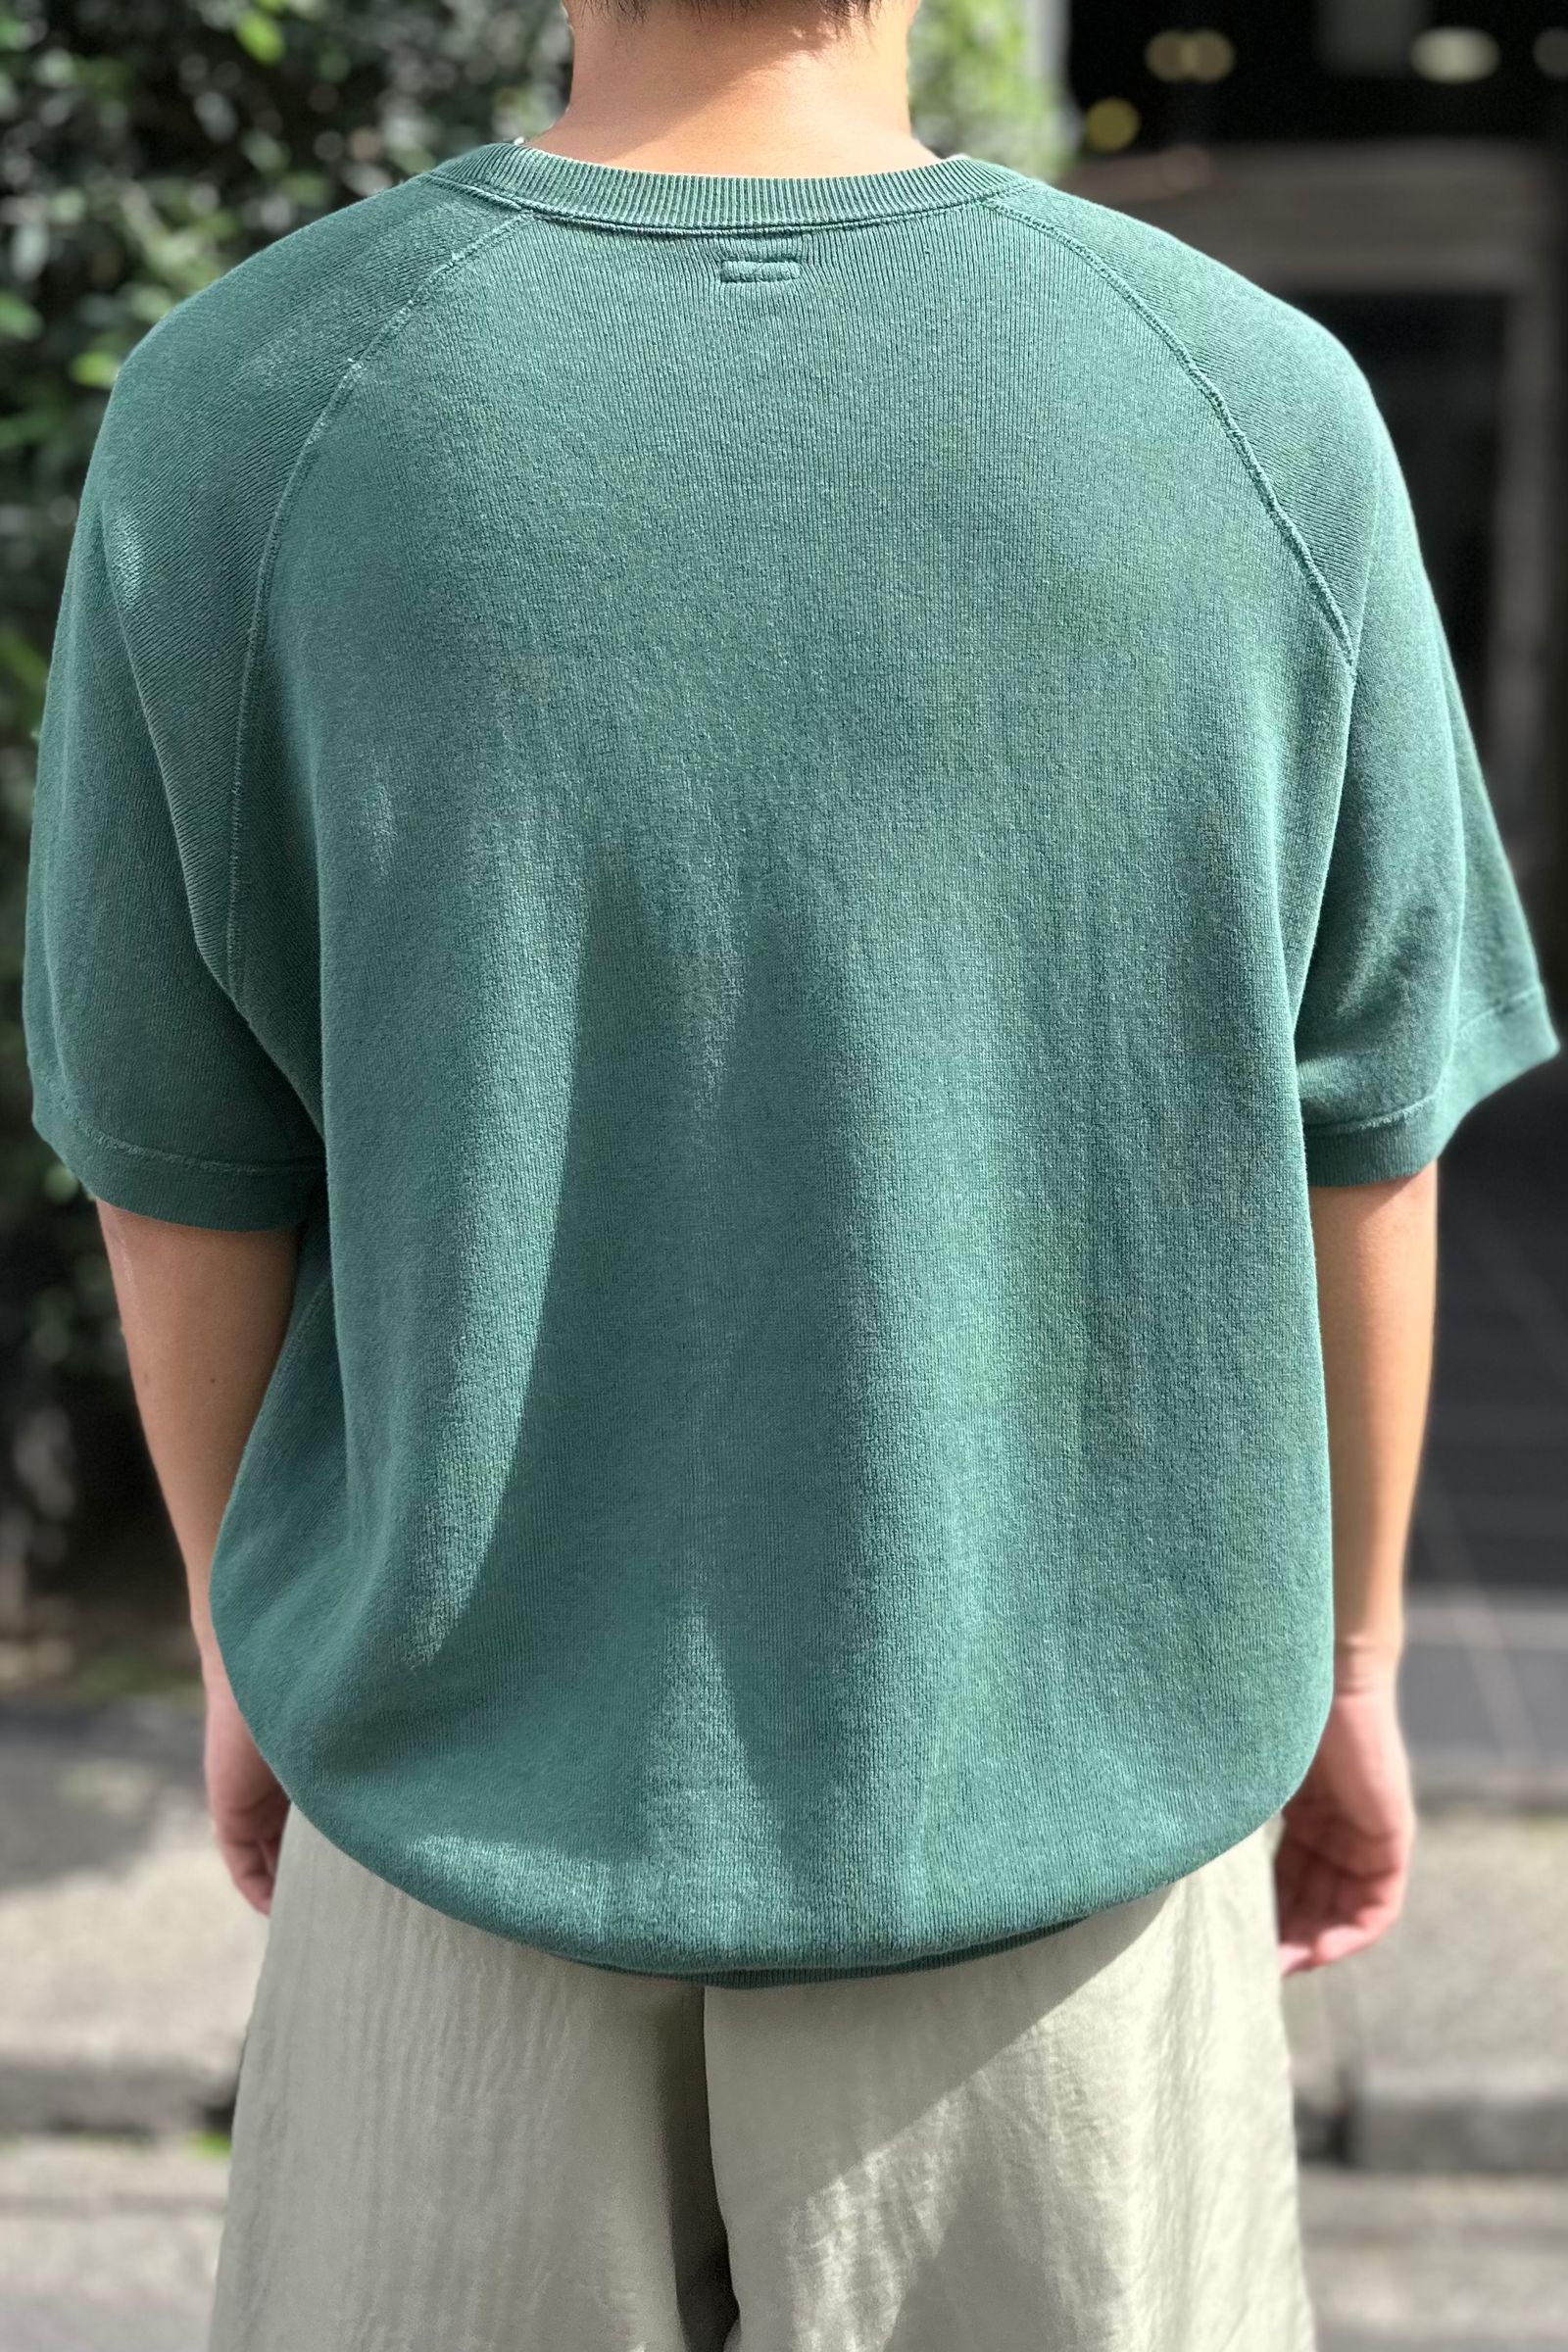 A.PRESSE - s/s vintage sweatshirt -green- 23ss | asterisk